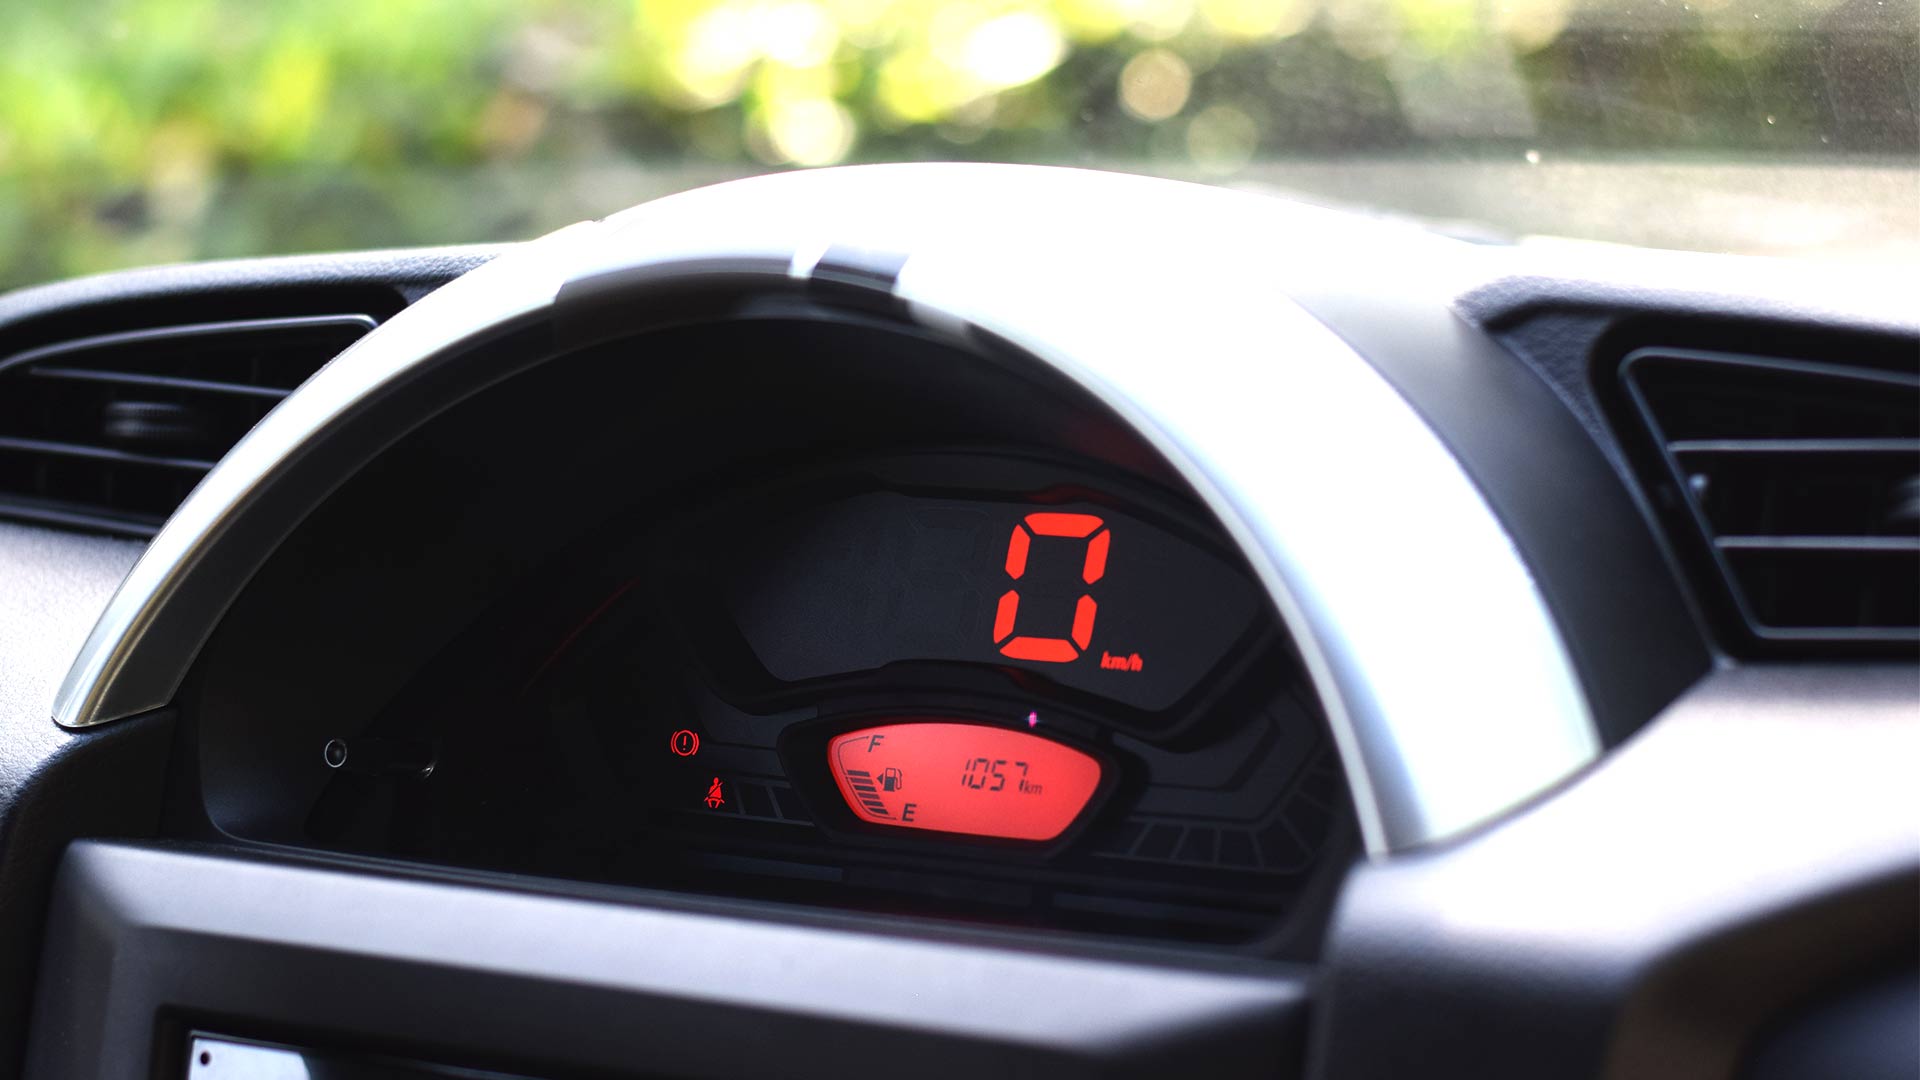 The Suzuki S-Presso odometer